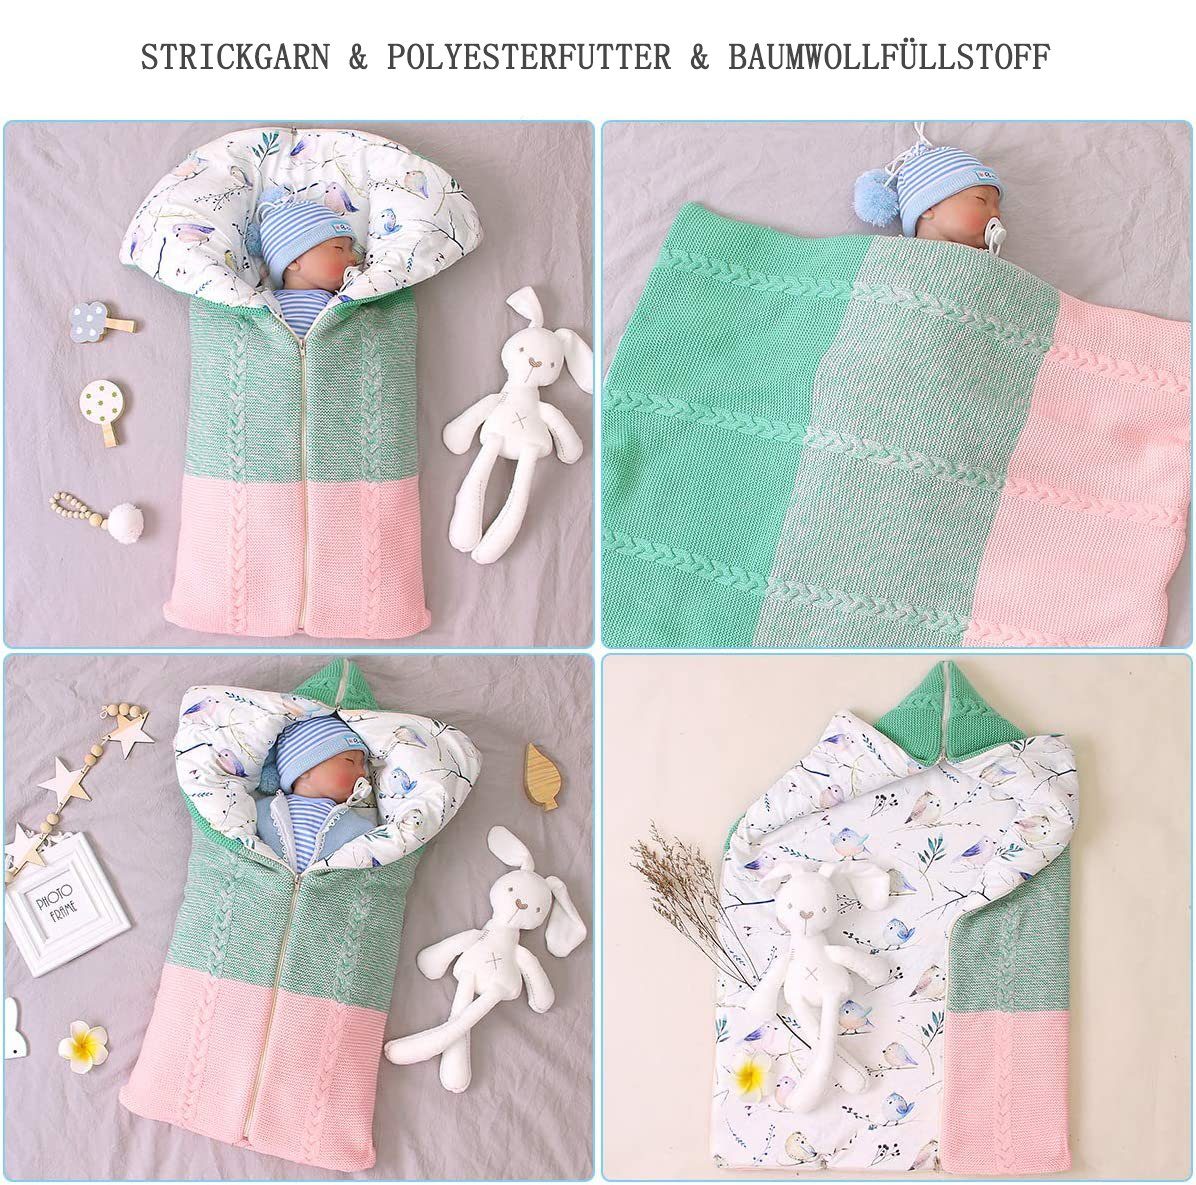 Decke, Babydecke Multifunktional Schlafsack Kinderwagen Neugeborenen rosa,grün Wickeldecke, Juoungle